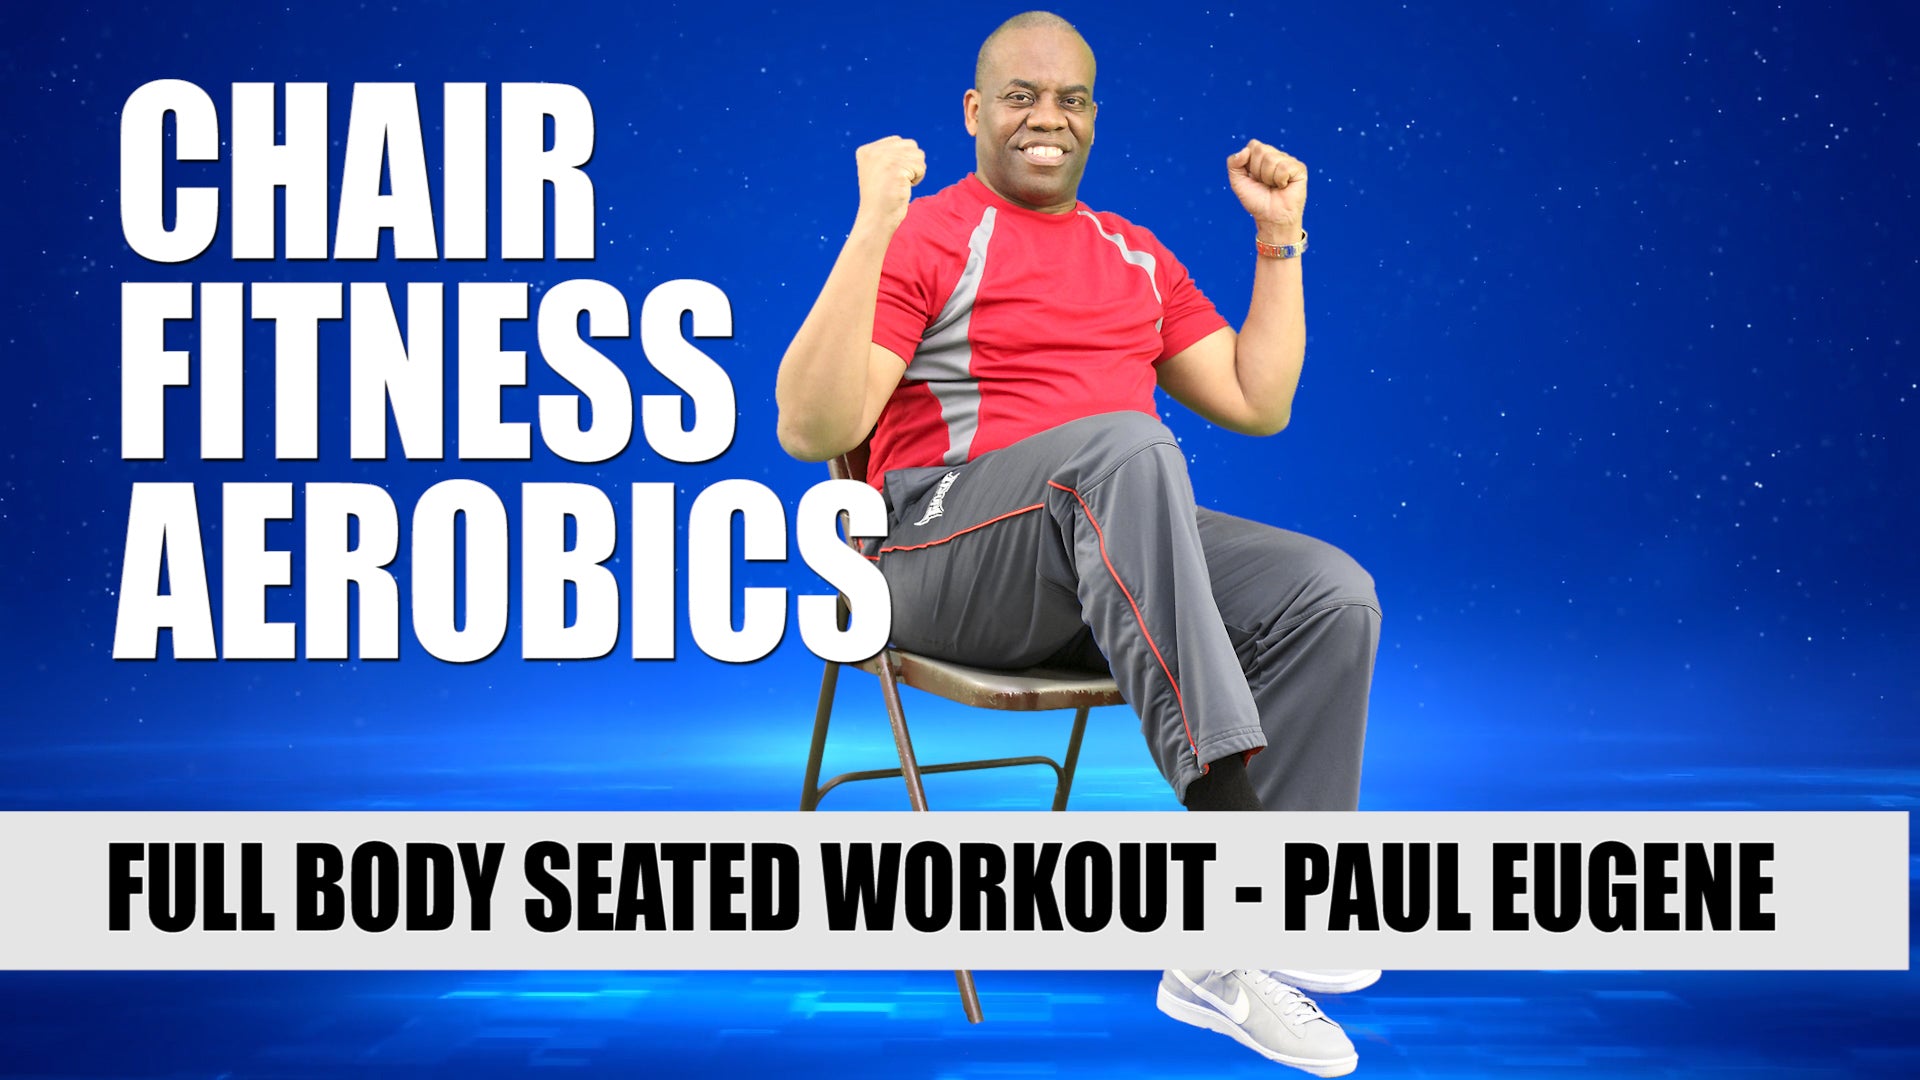 Chair Fitness Aerobics